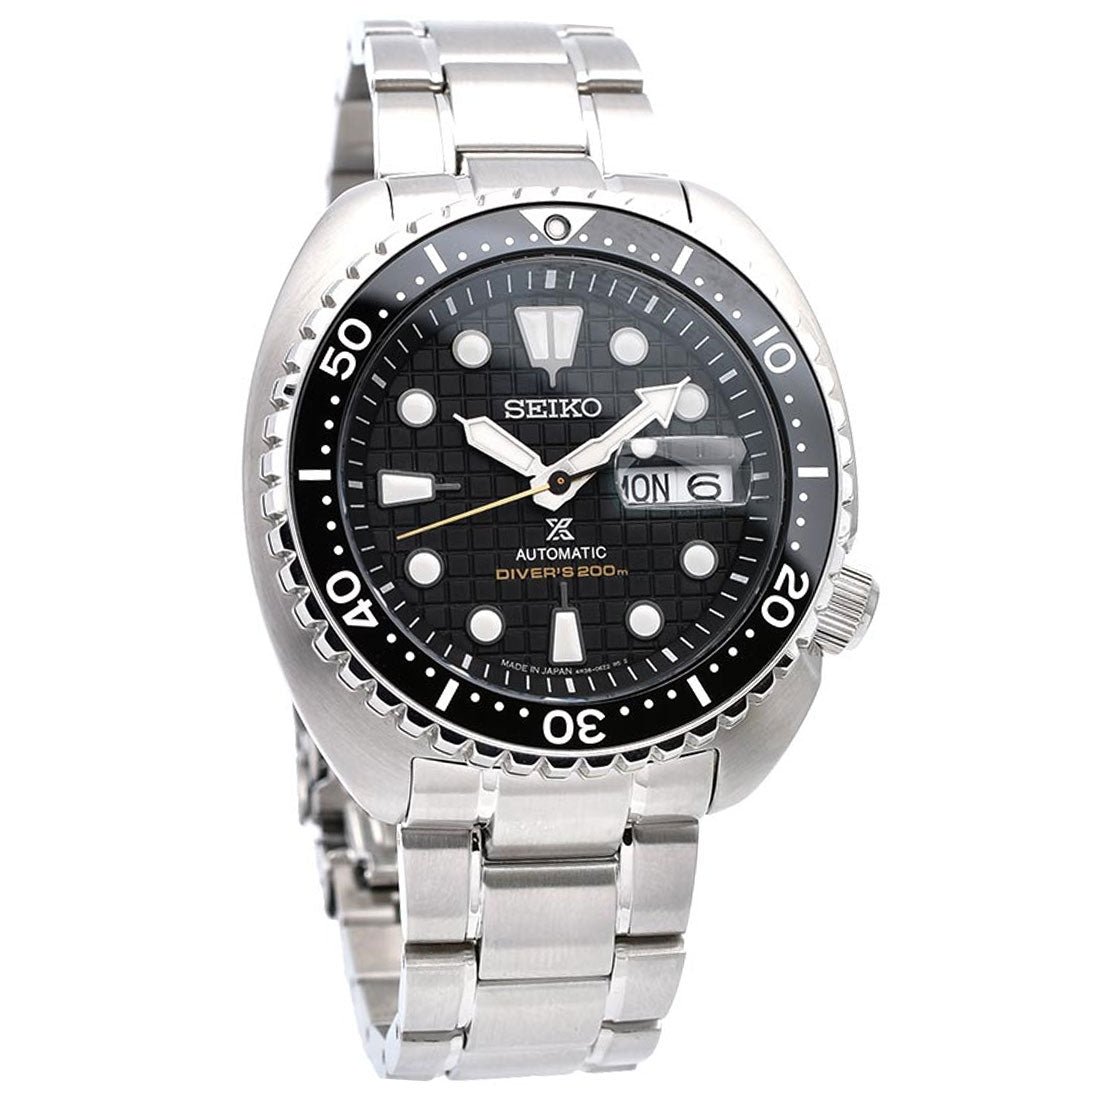 Seiko King Turtle JDM Prospex Automatic Divers Watch SBDY049 -Seiko